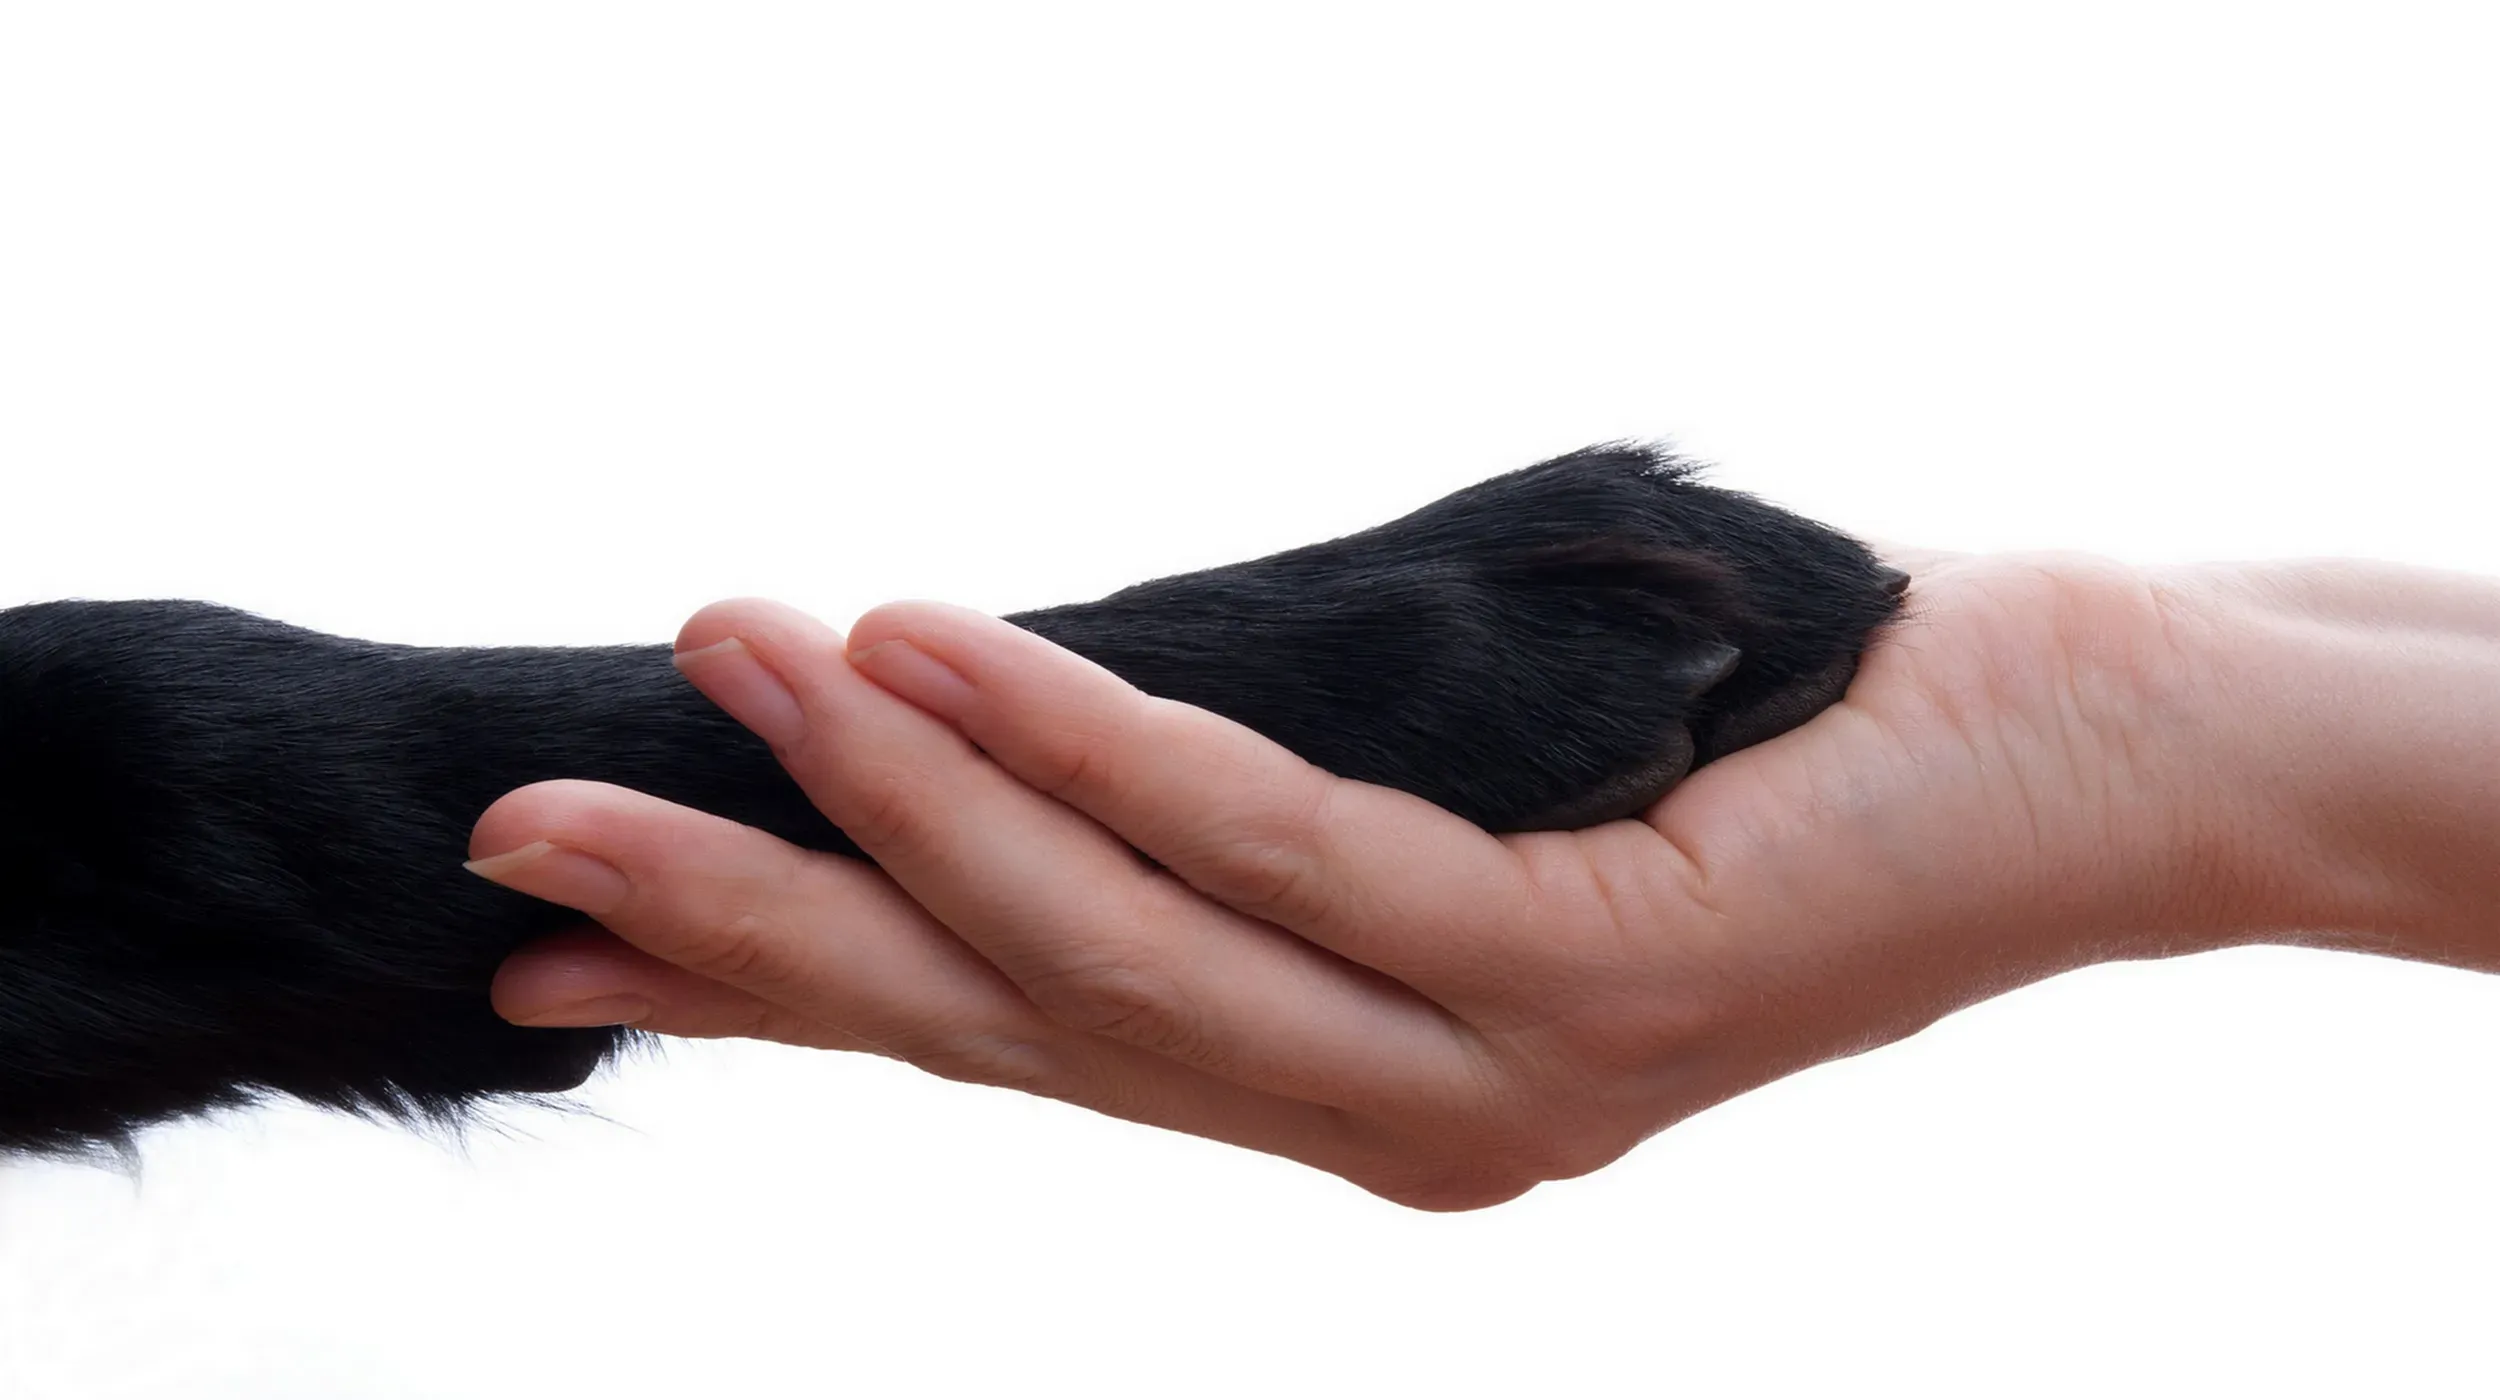 Dog paw holding human hand